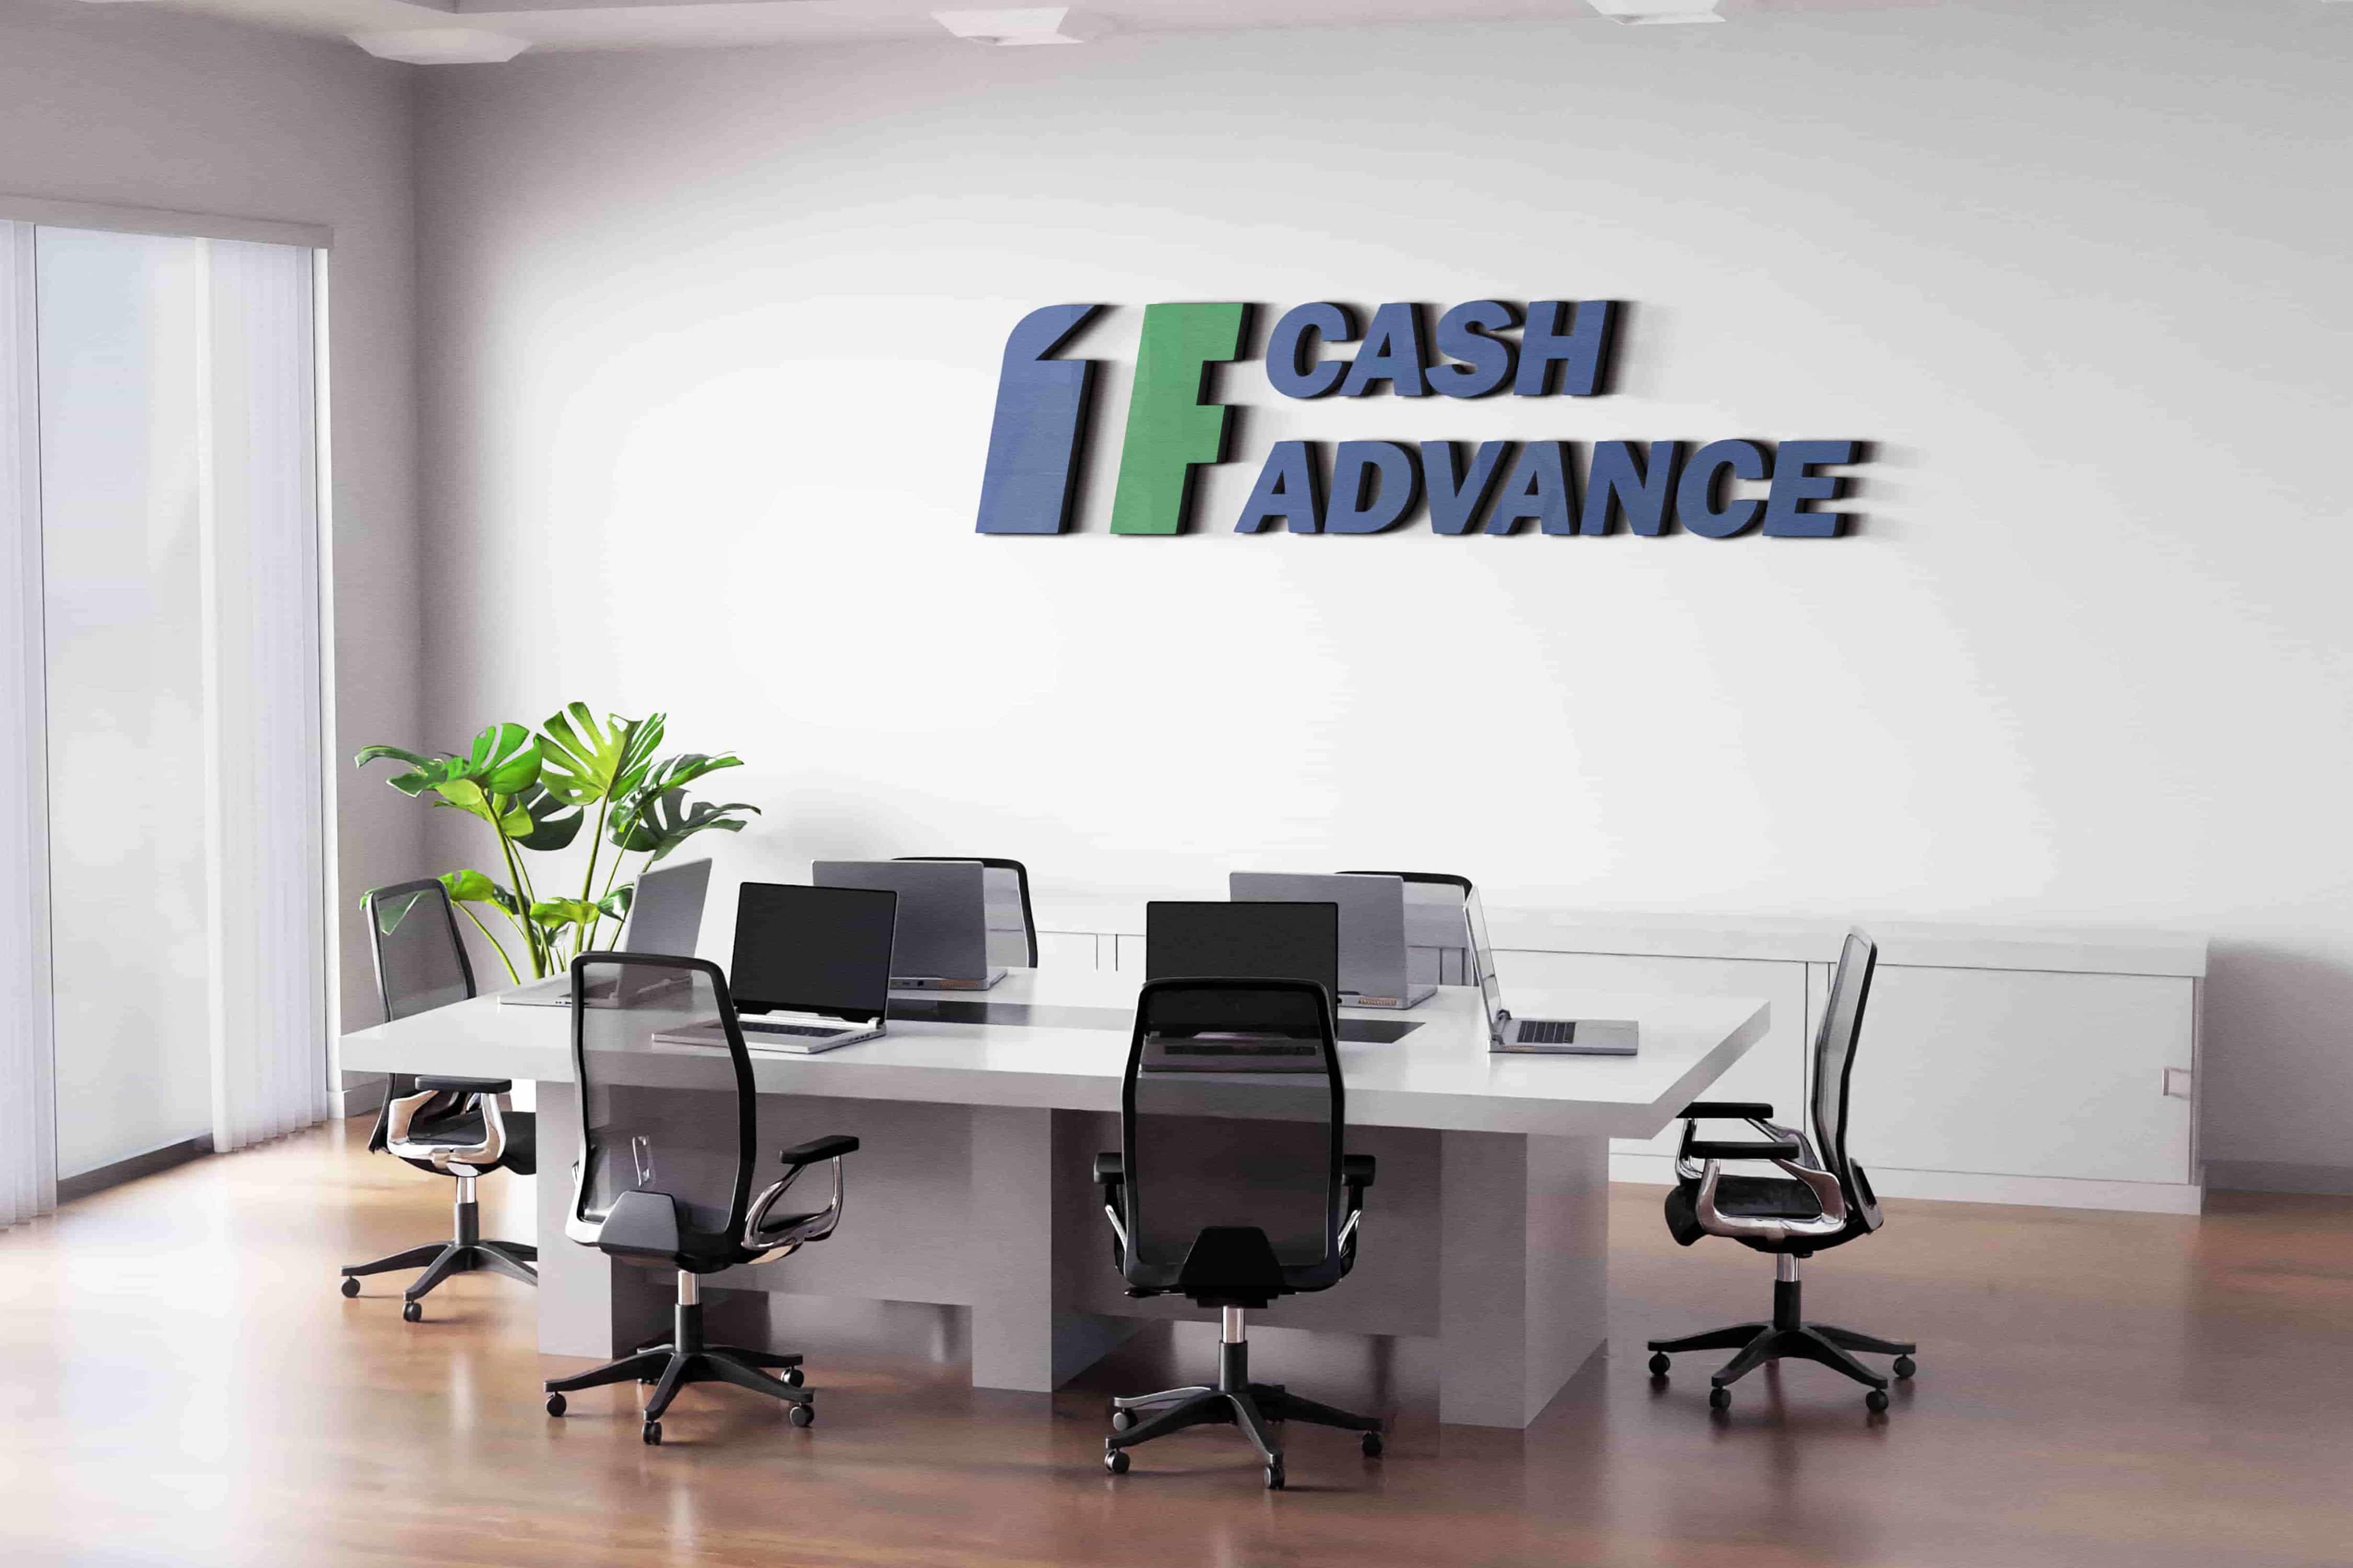 1F Cash Advance payday loans in Little Rock, AR 72209